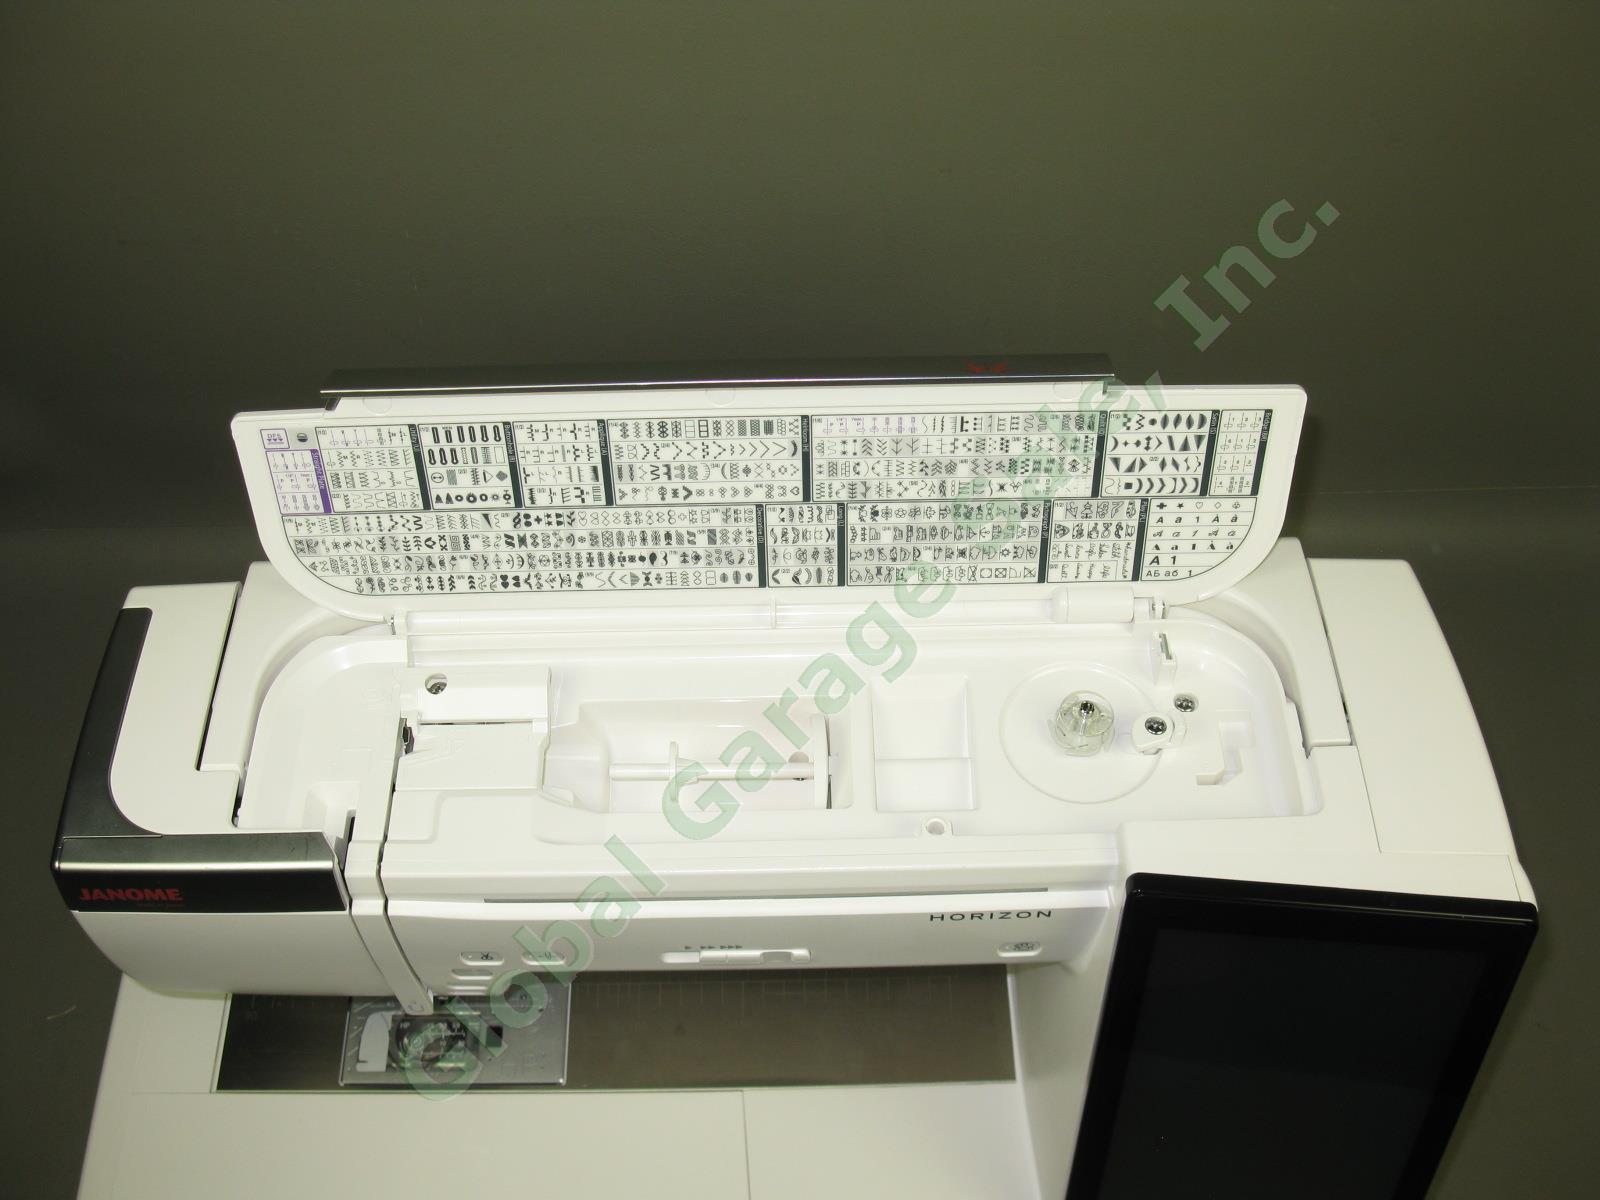 Janome Horizon Memory Craft MC 15000 Sewing Embroidery Machine 2 HOURS! Vers 3.0 11